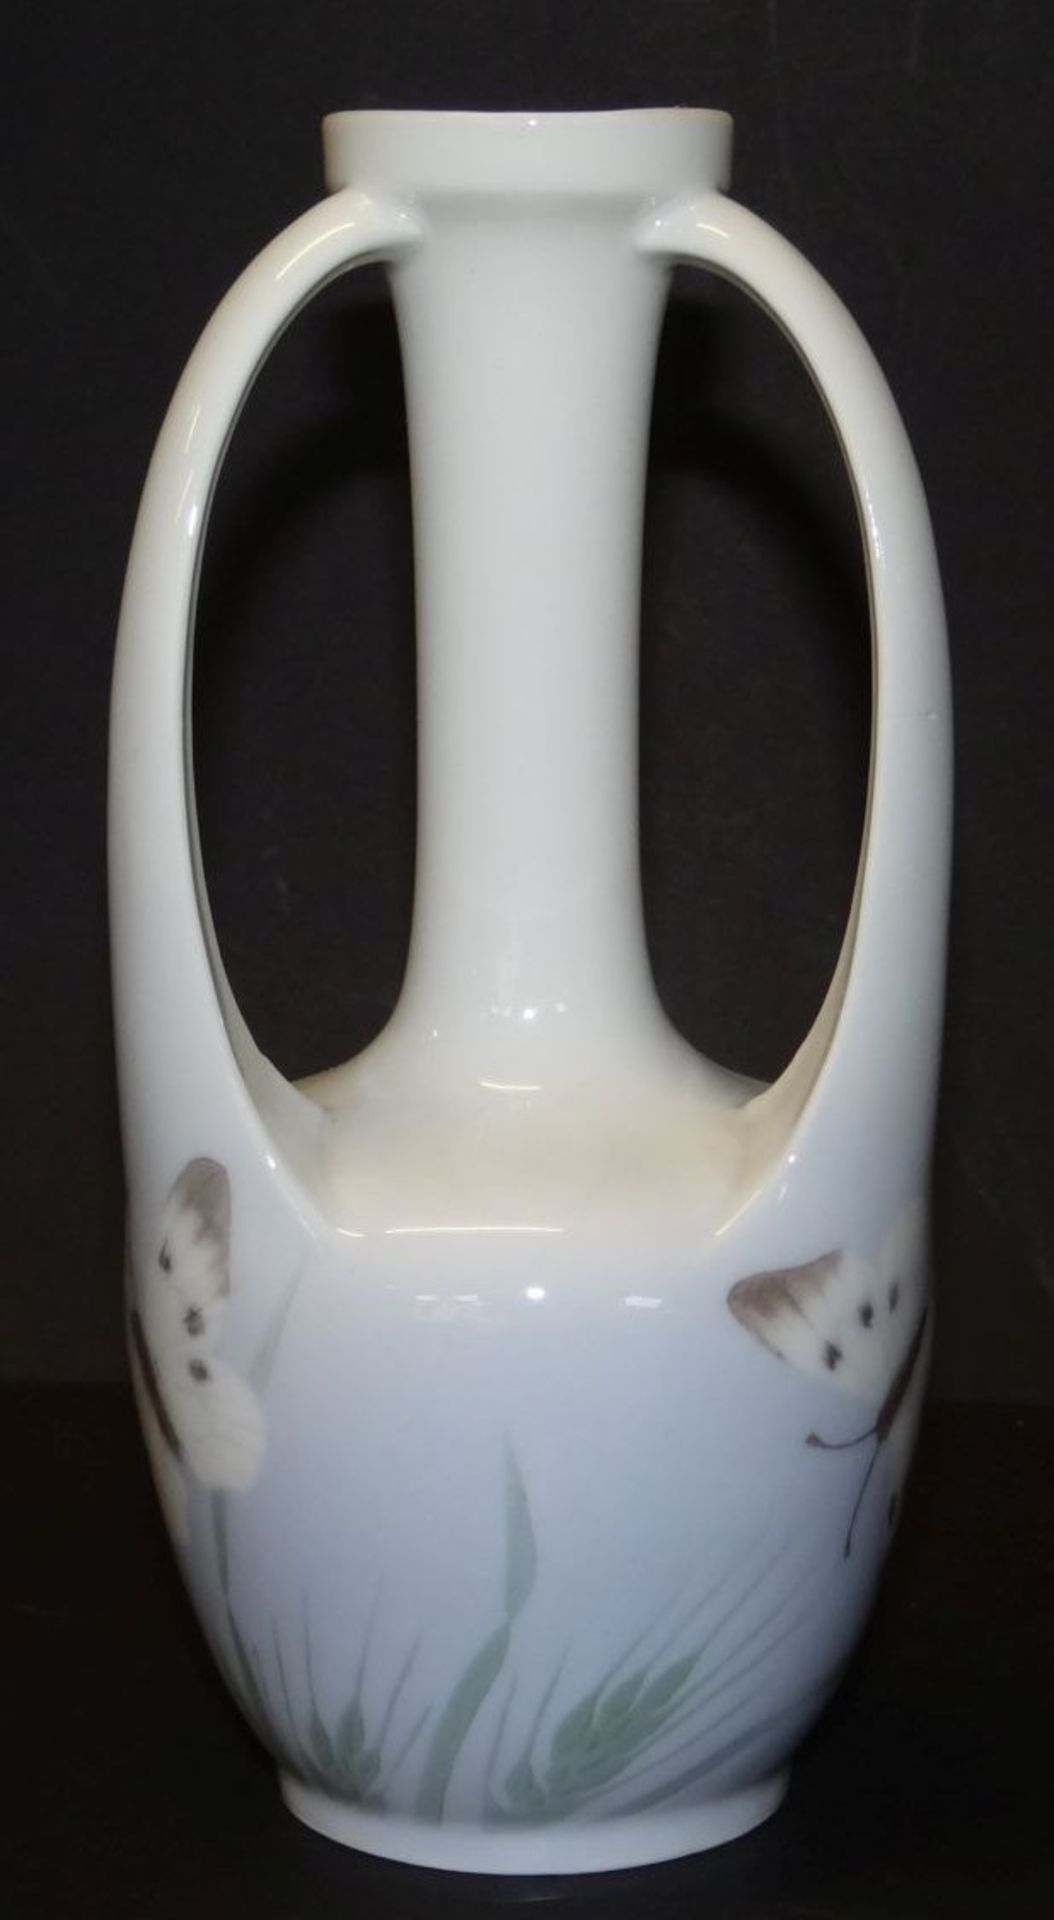 Jugendstil-Vase "Royal Copenhagen" bemalt mit Schmetterlingen, Hals mit feinen Altriss, H-17 cm